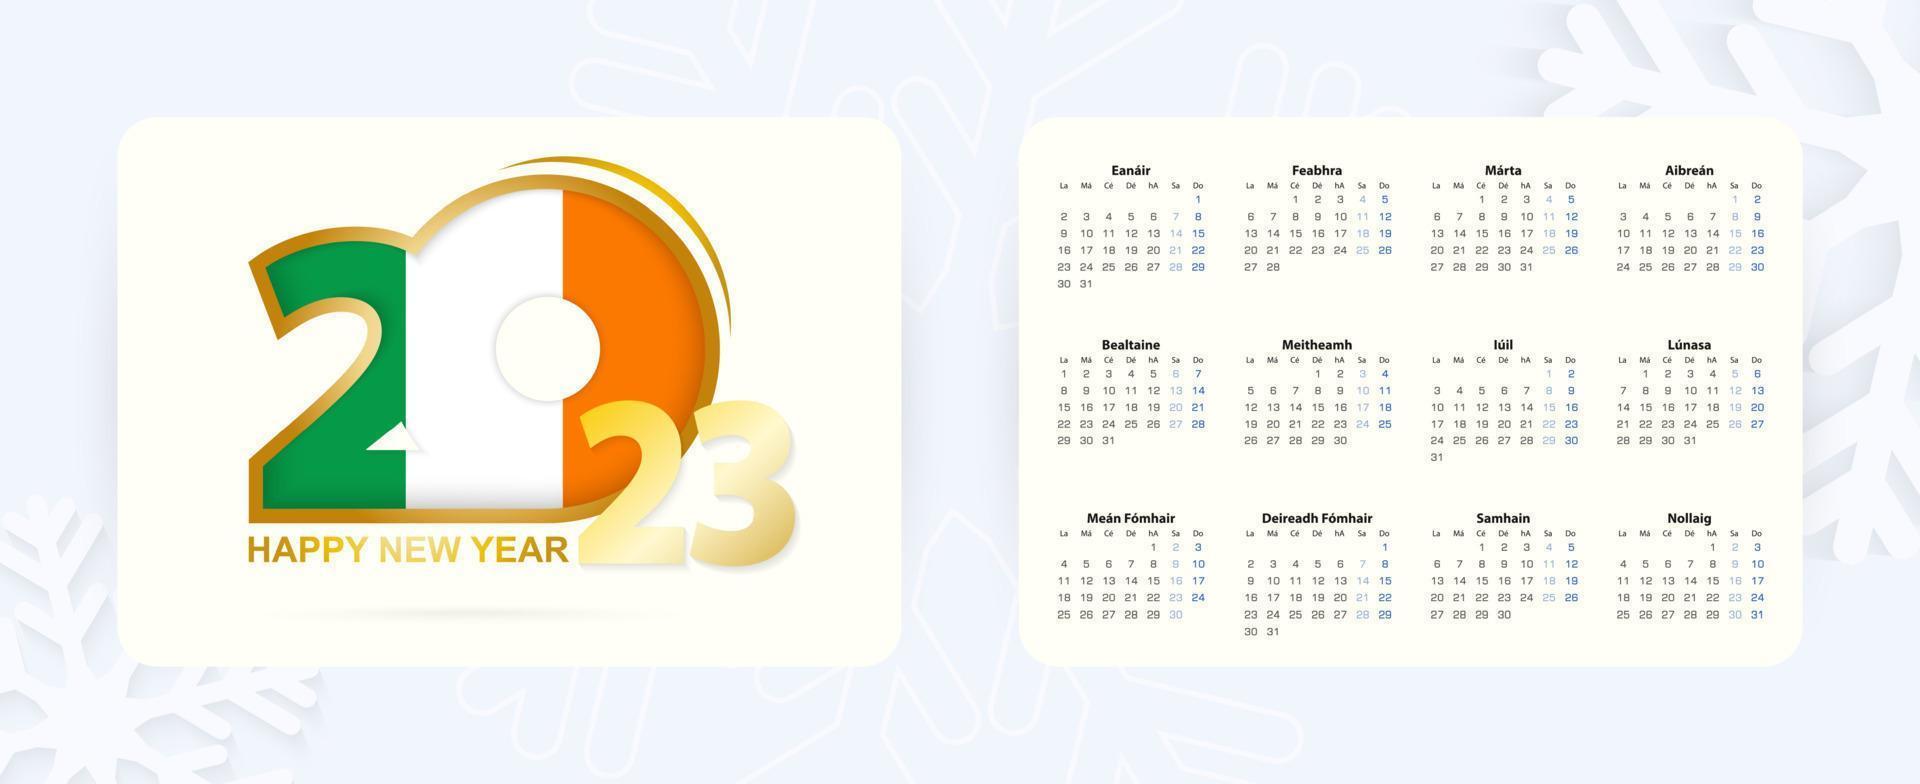 Horizontal Pocket Calendar 2023 in Irish language. New Year 2023 icon with flag of Ireland. vector